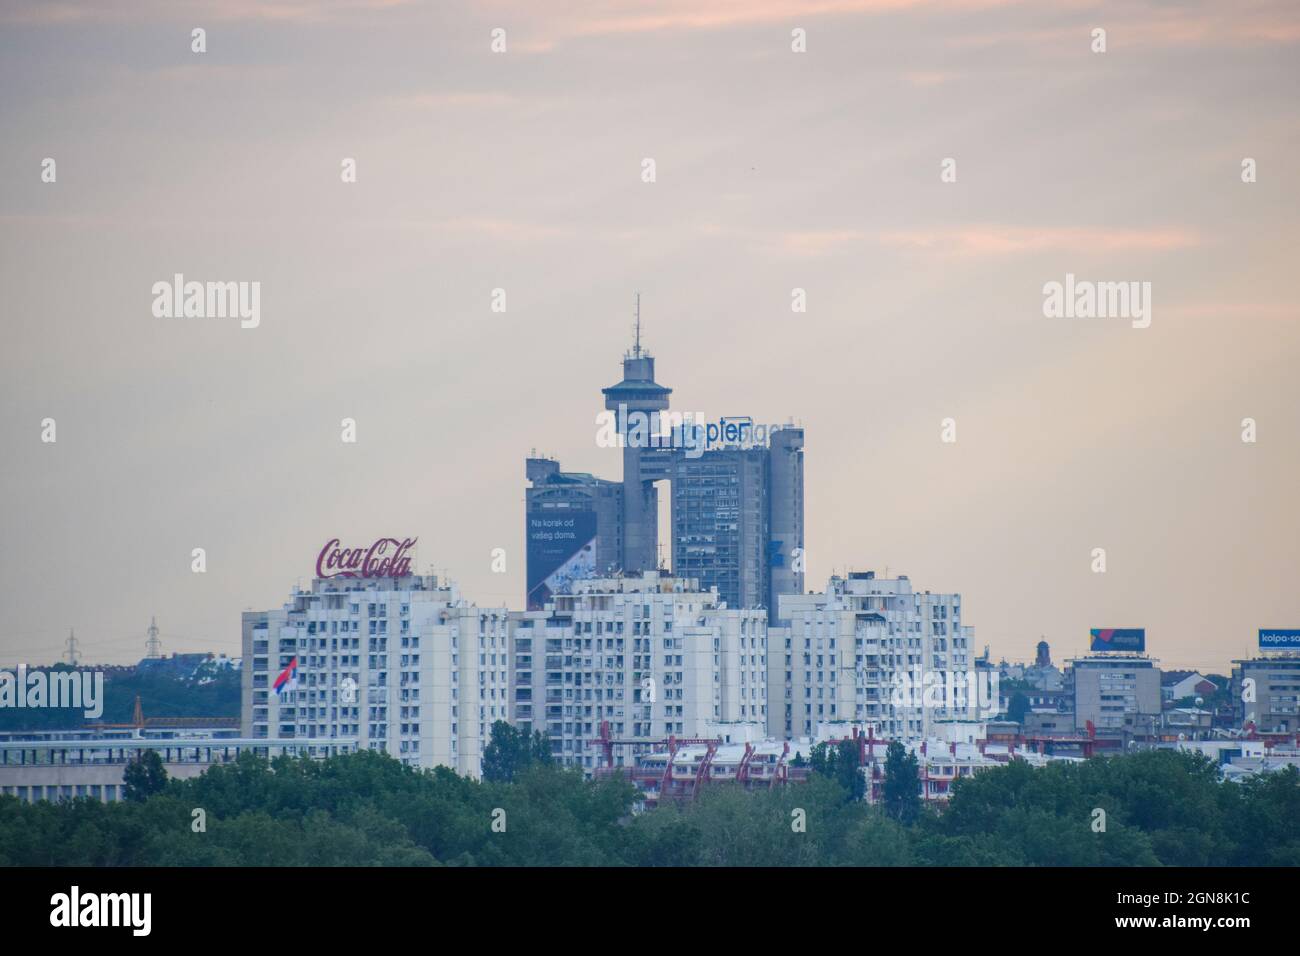 Western City Gate, Genex Tower, Belgrade, Serbia, May 2019. Stock Photo